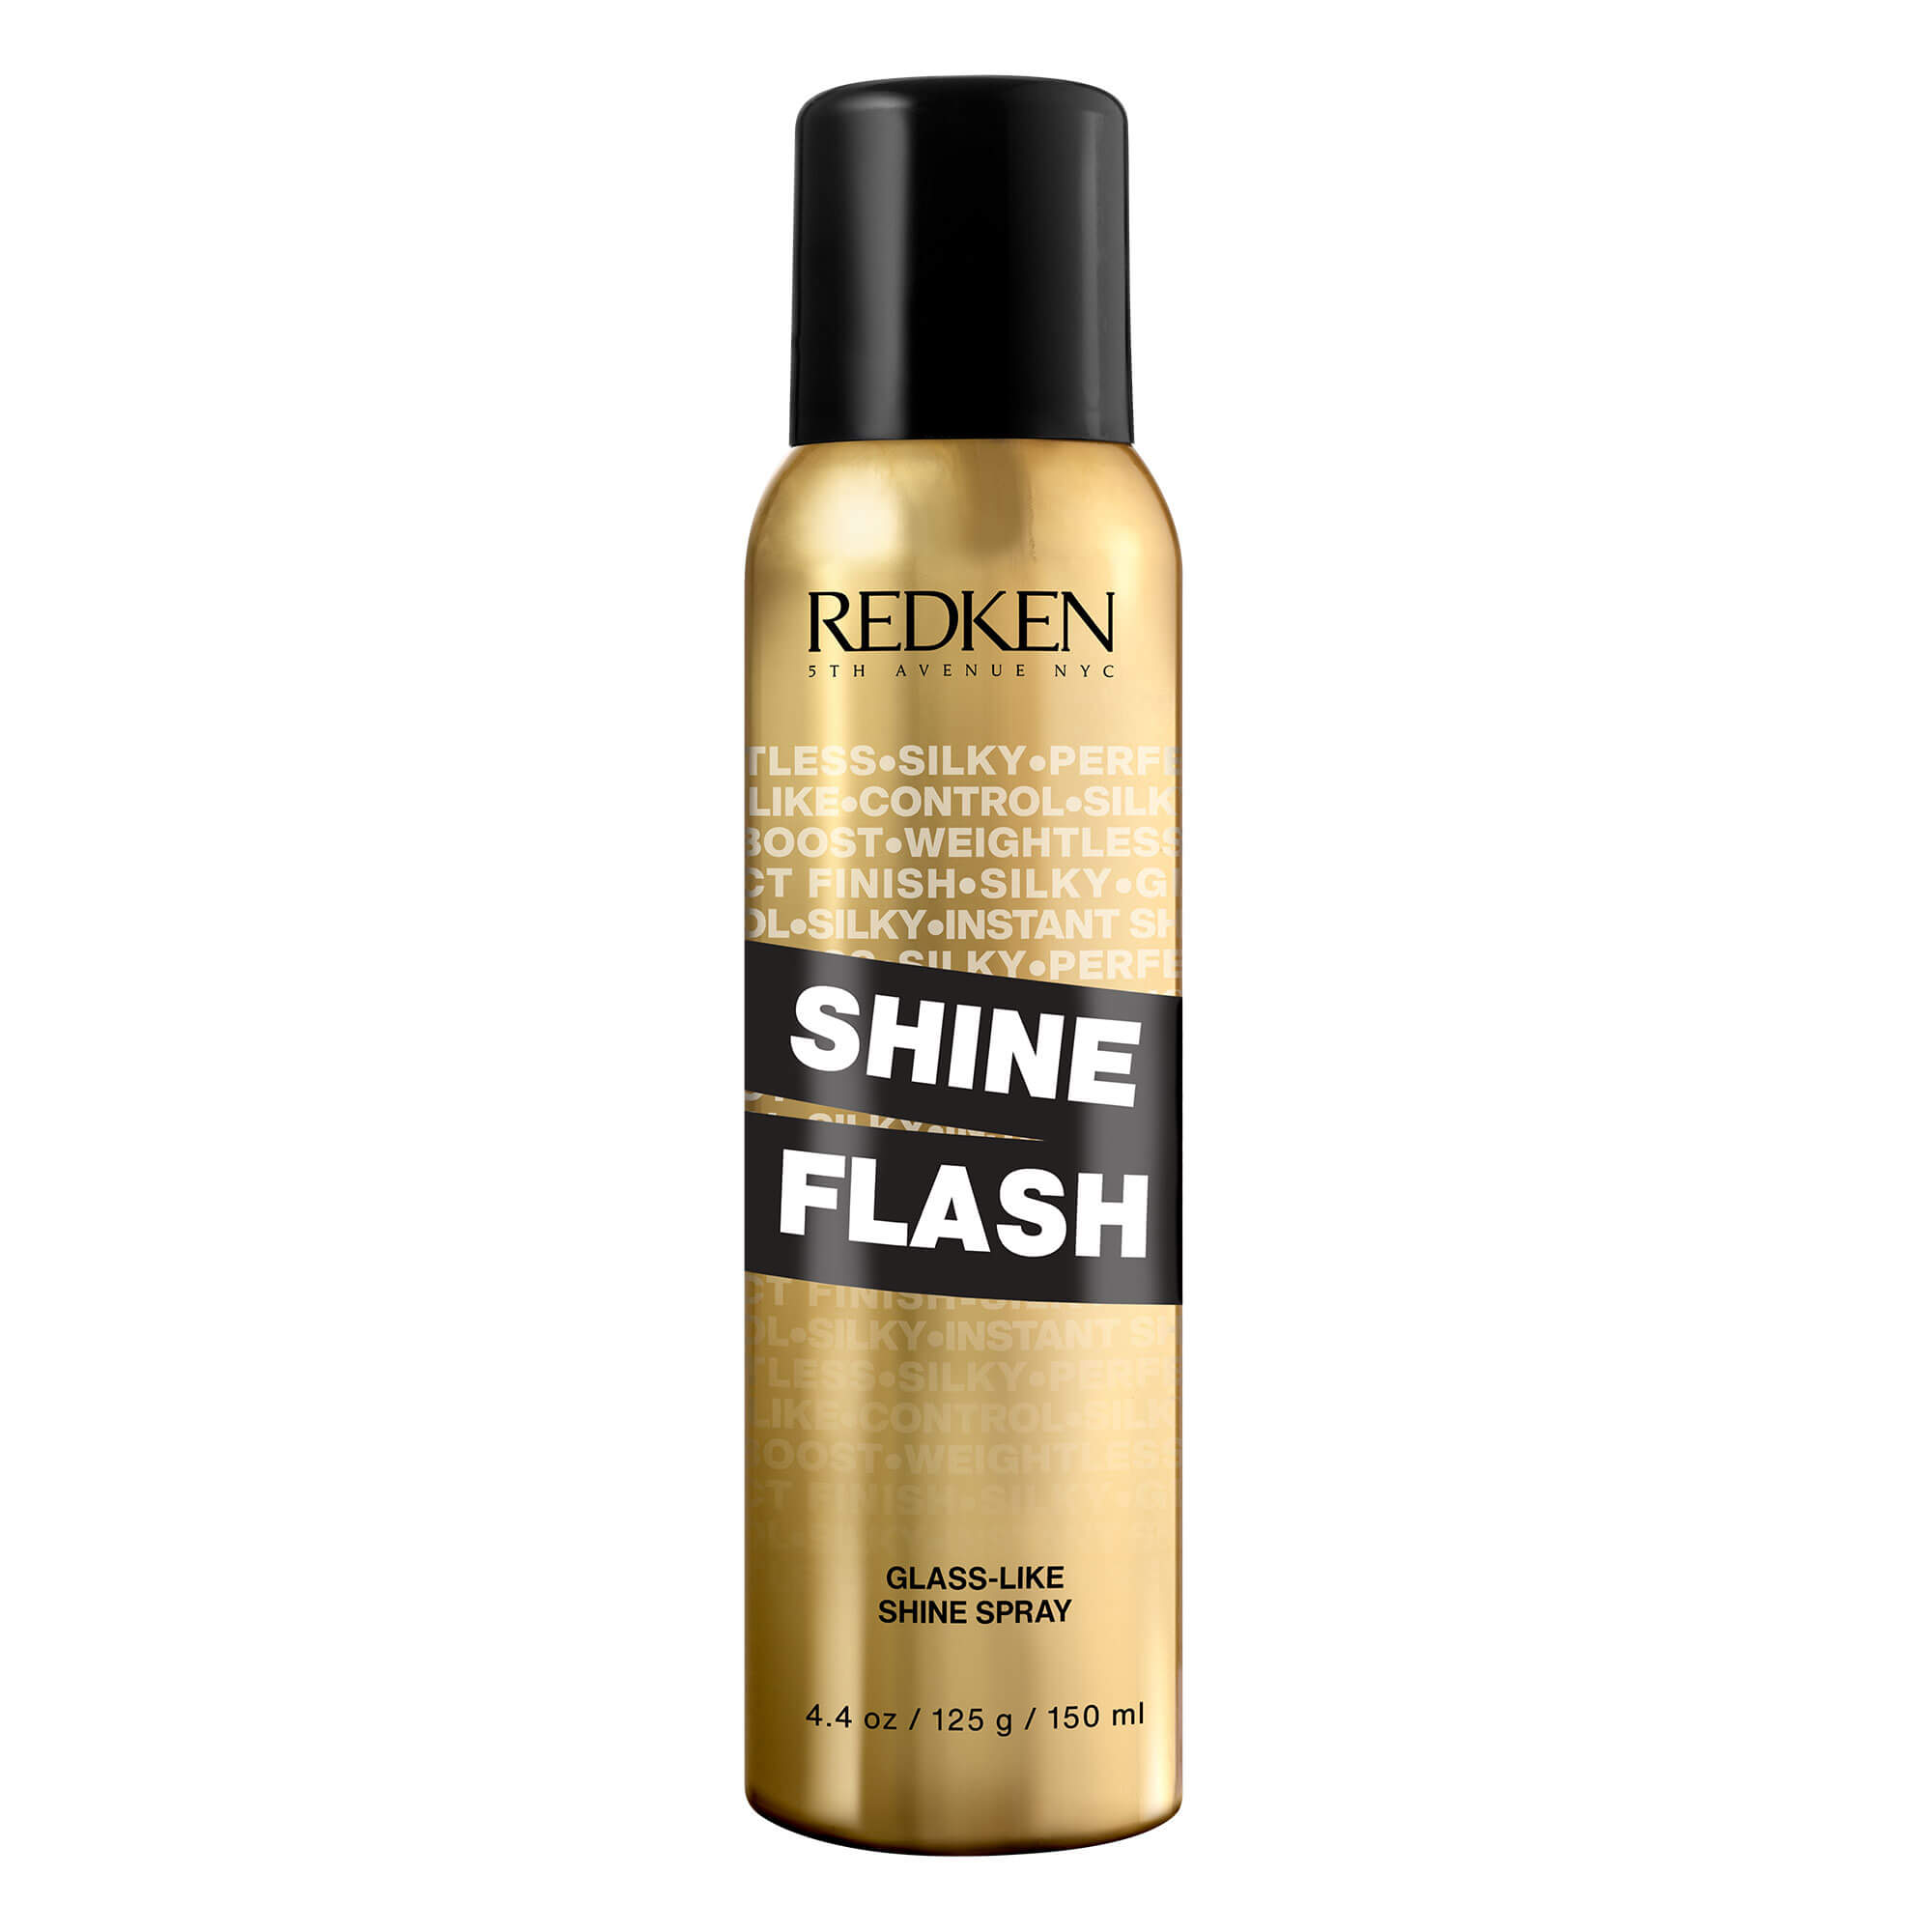 https://www.redken.ca/-/media/project/loreal/brand-sites/redken/americas/ca/product-information/product-images/styling/shine-flash/shine-flash-en/redken-2020-shine-flash-product-shot-2000x2000-01.jpg?rev=d9964de77c2a46fcbd44f0596b663ea9